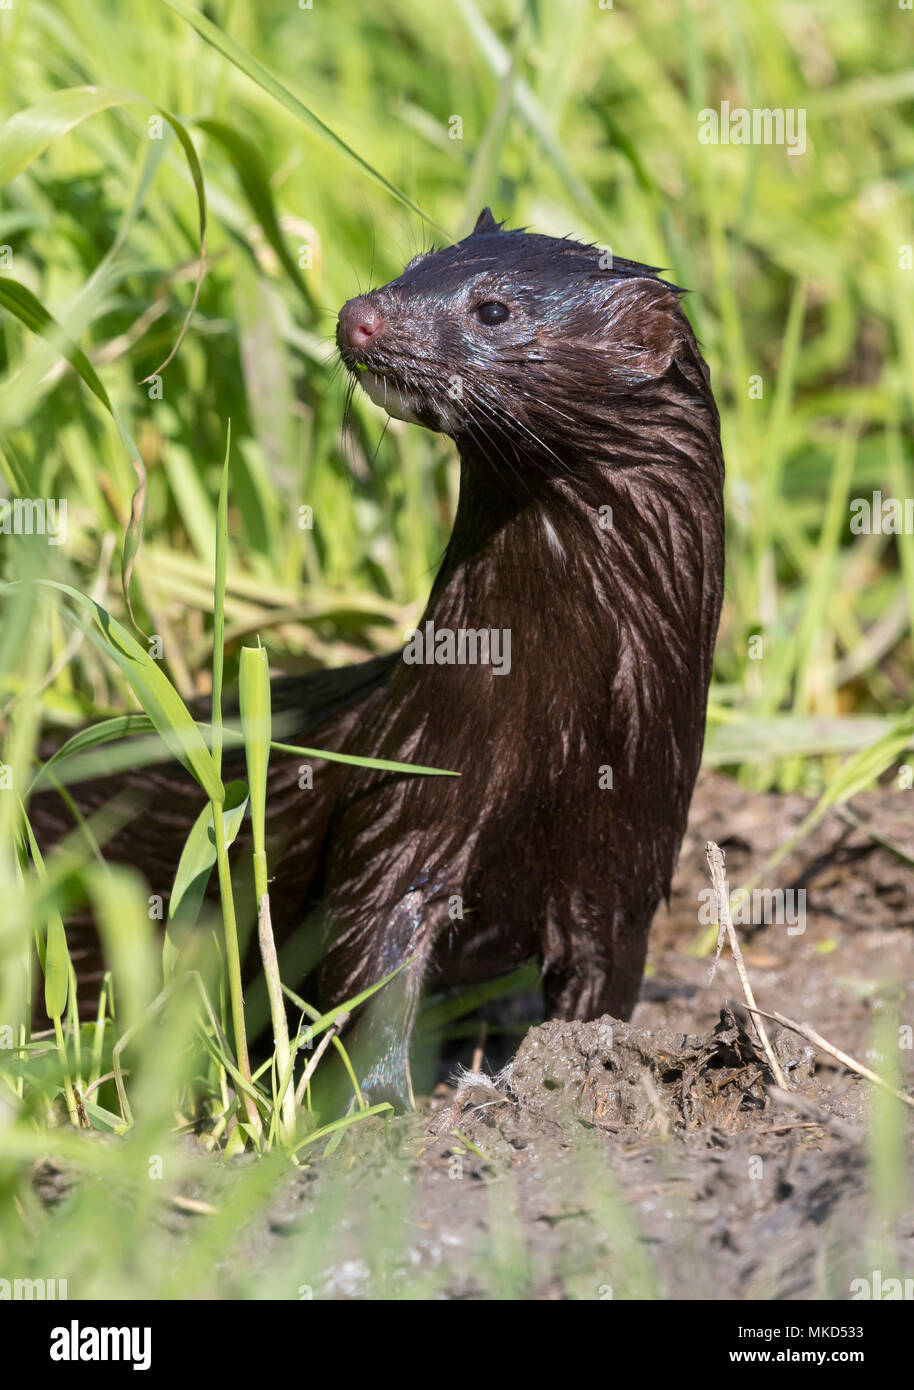 American mink (Neovison vison) Mink amongst grasses, England, Summer Stock Photo